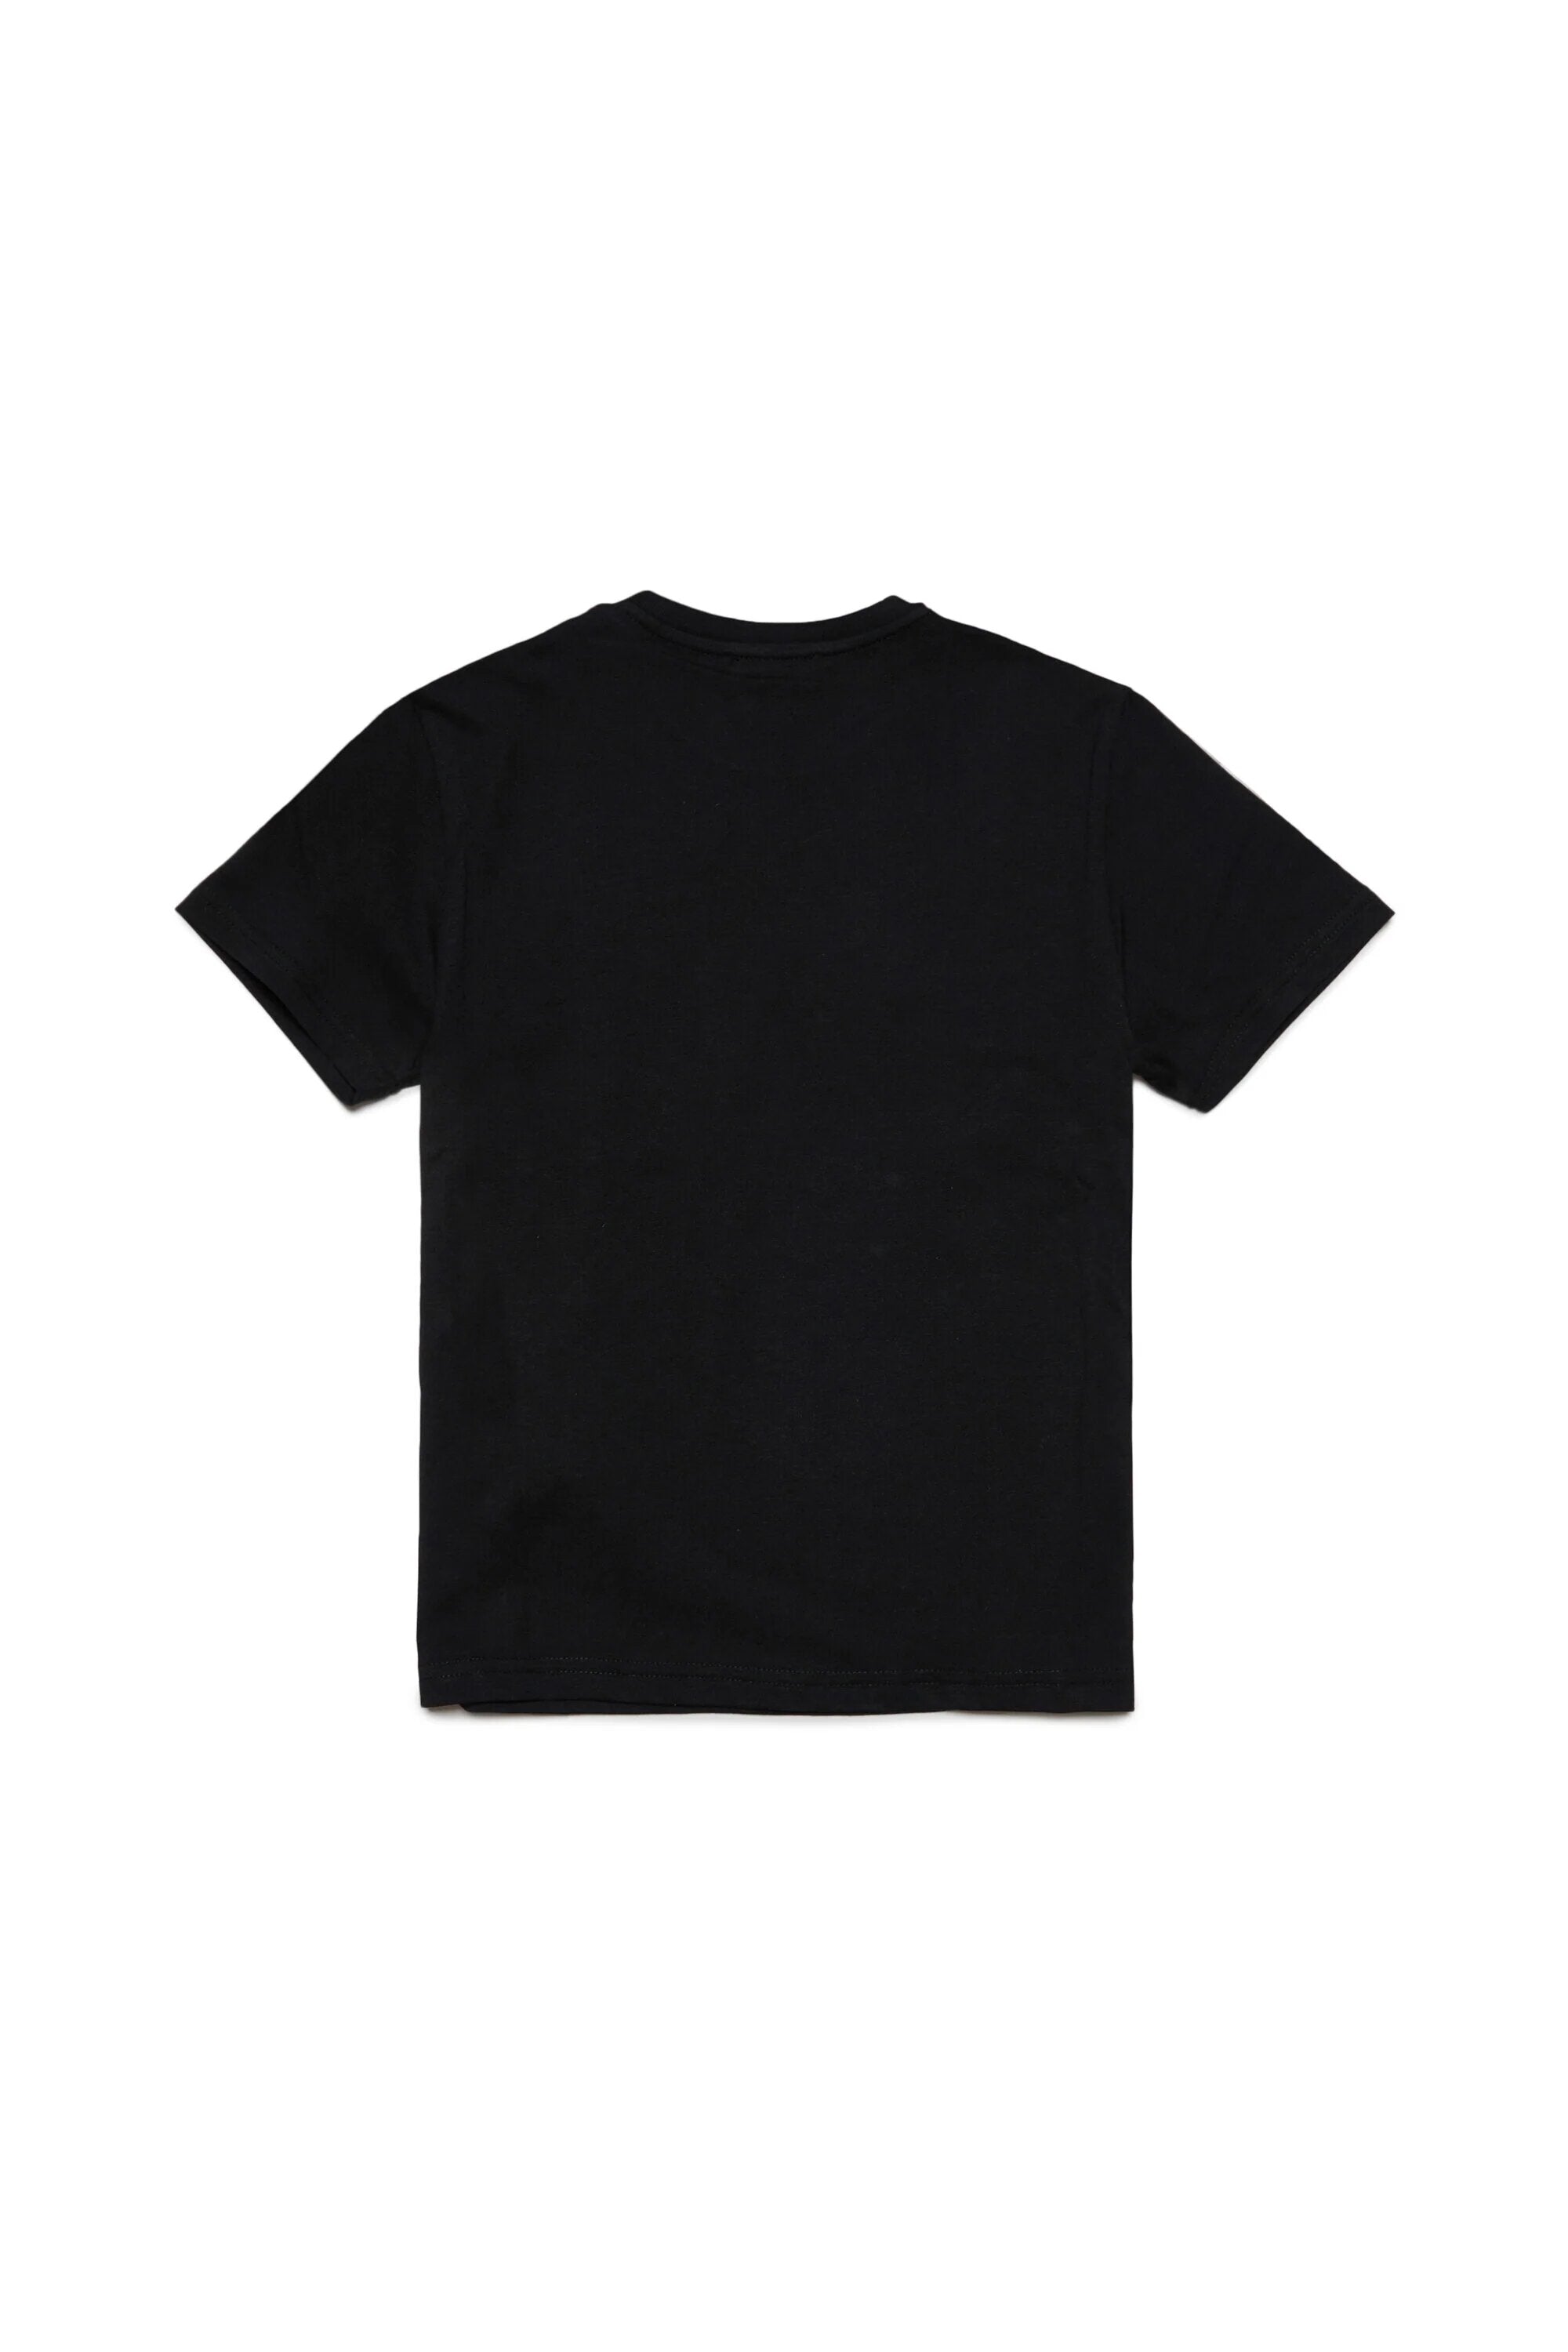 DSQUARED2-T-Shirt Unisex Bambino Relax Eco Logo-Nero